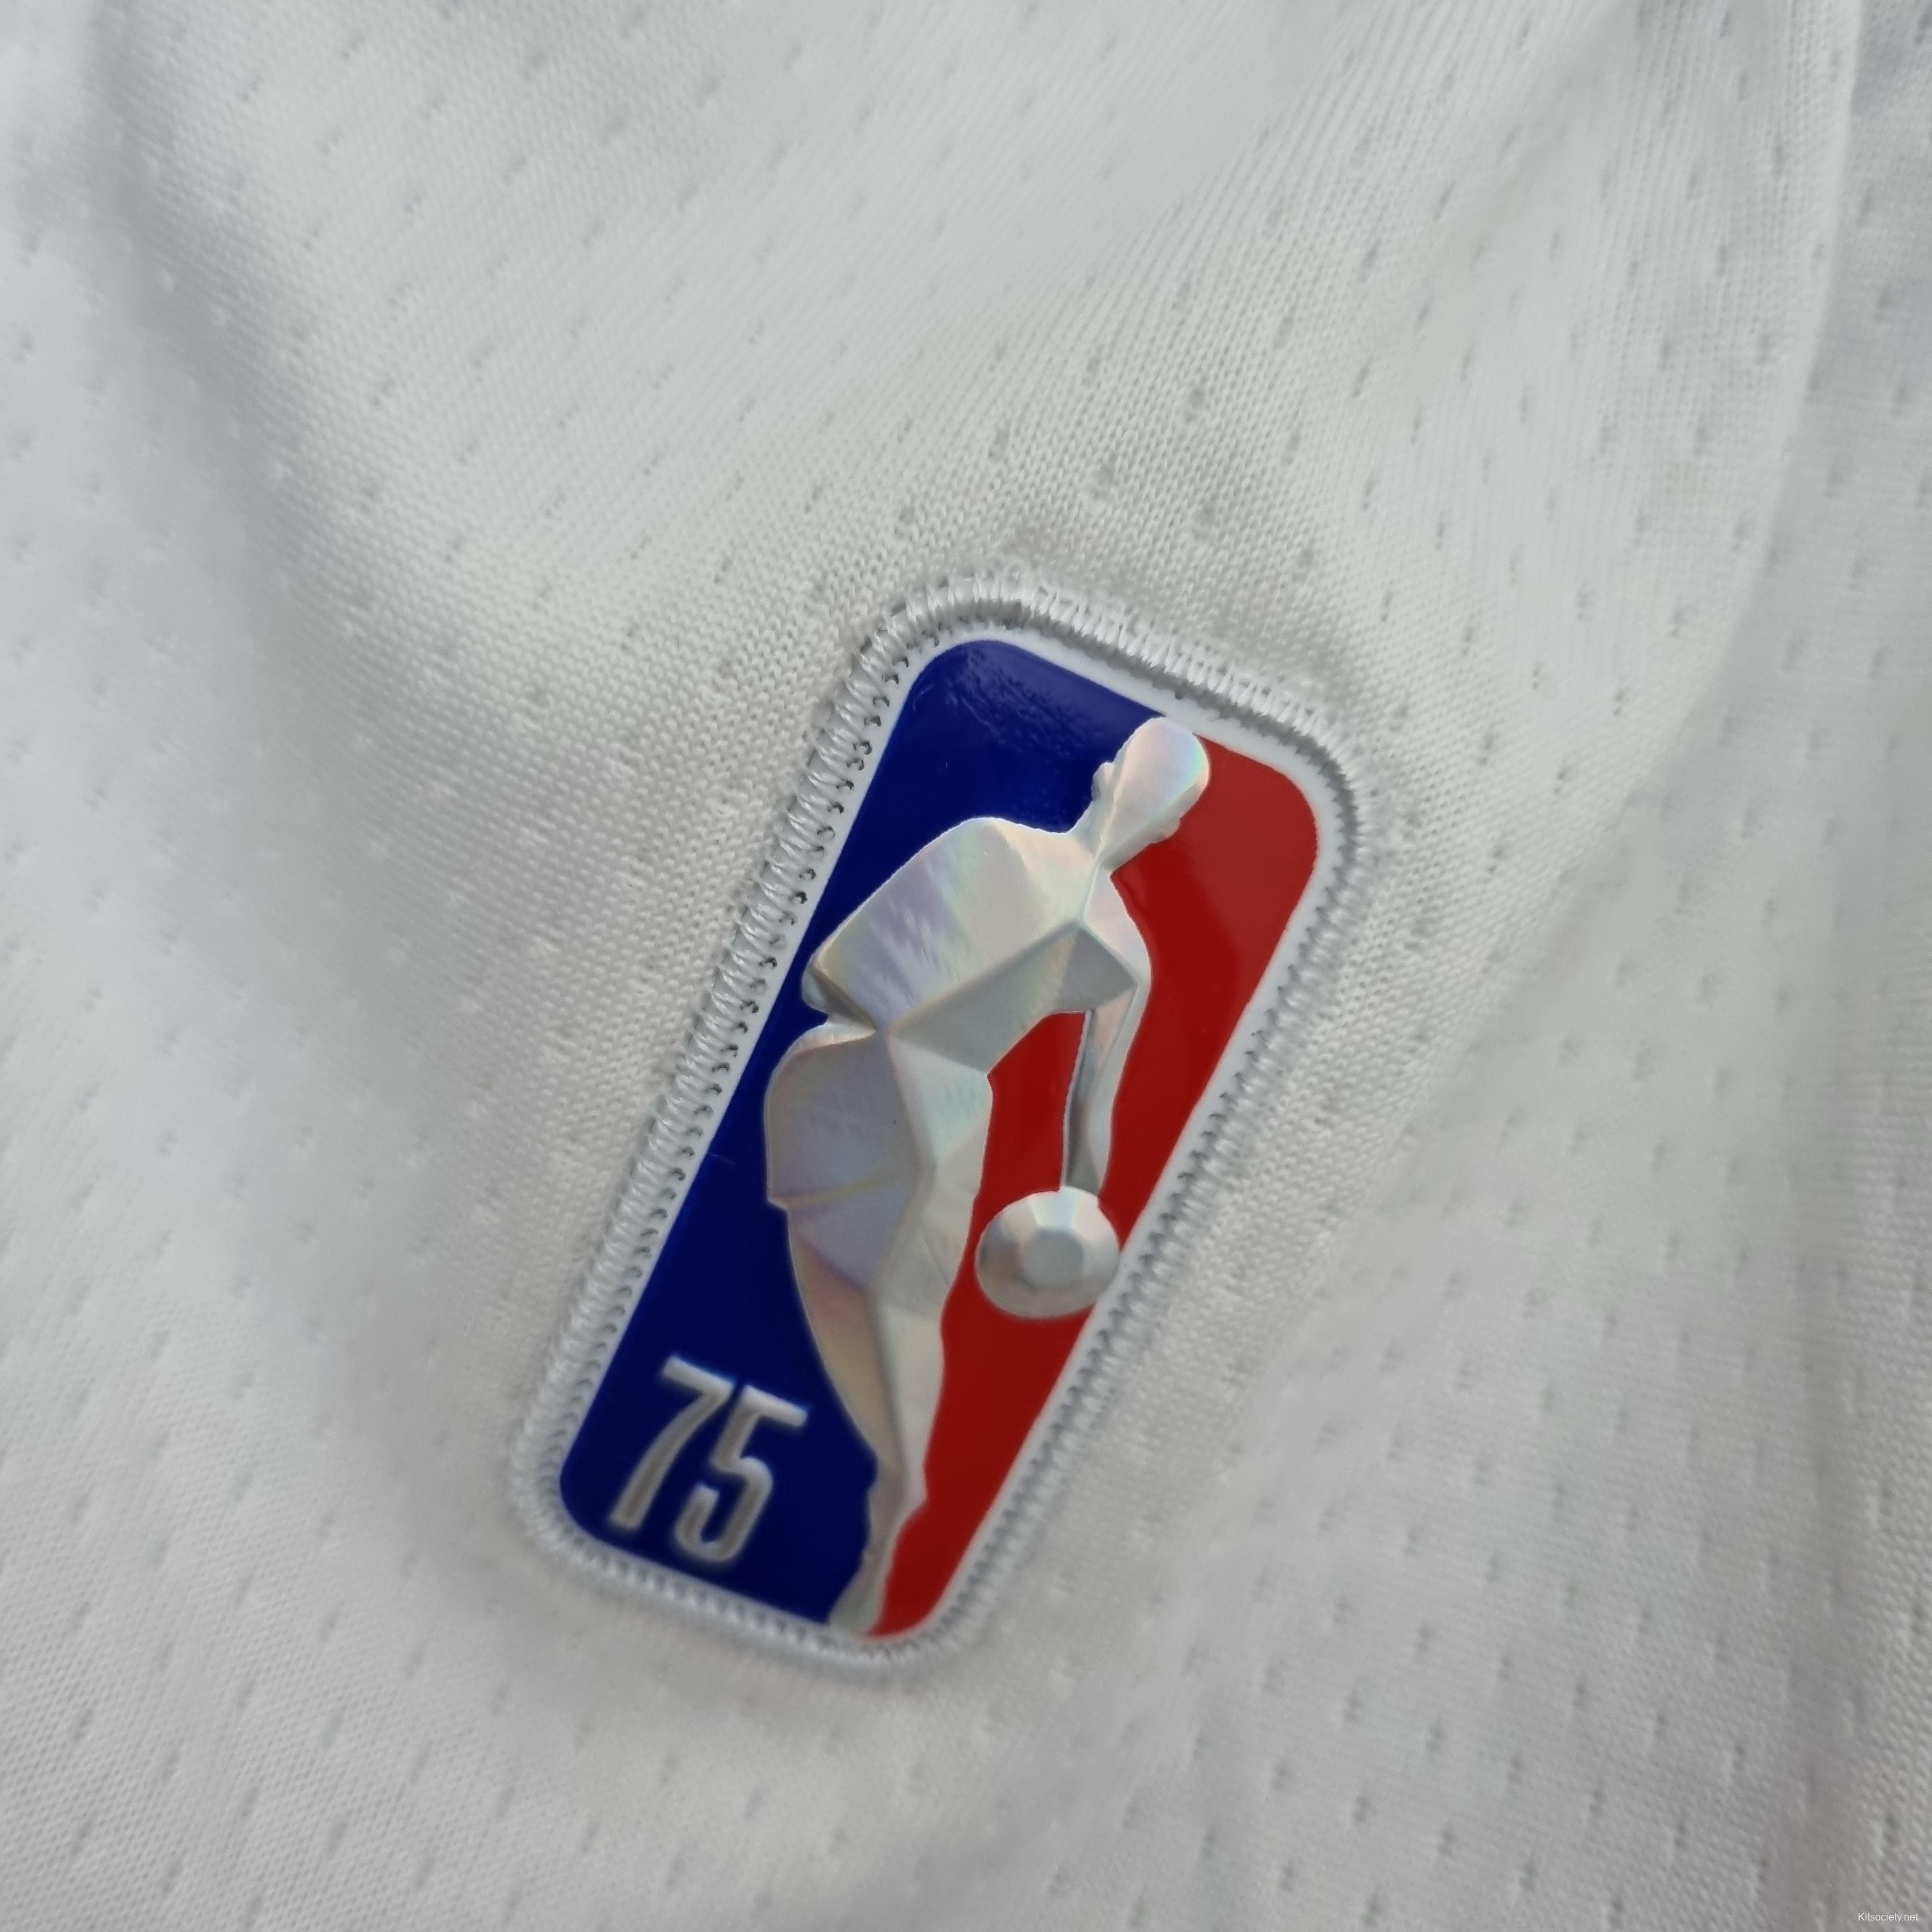 NBA 75th Anniversary Edition Patch/Logos/NBA Gear